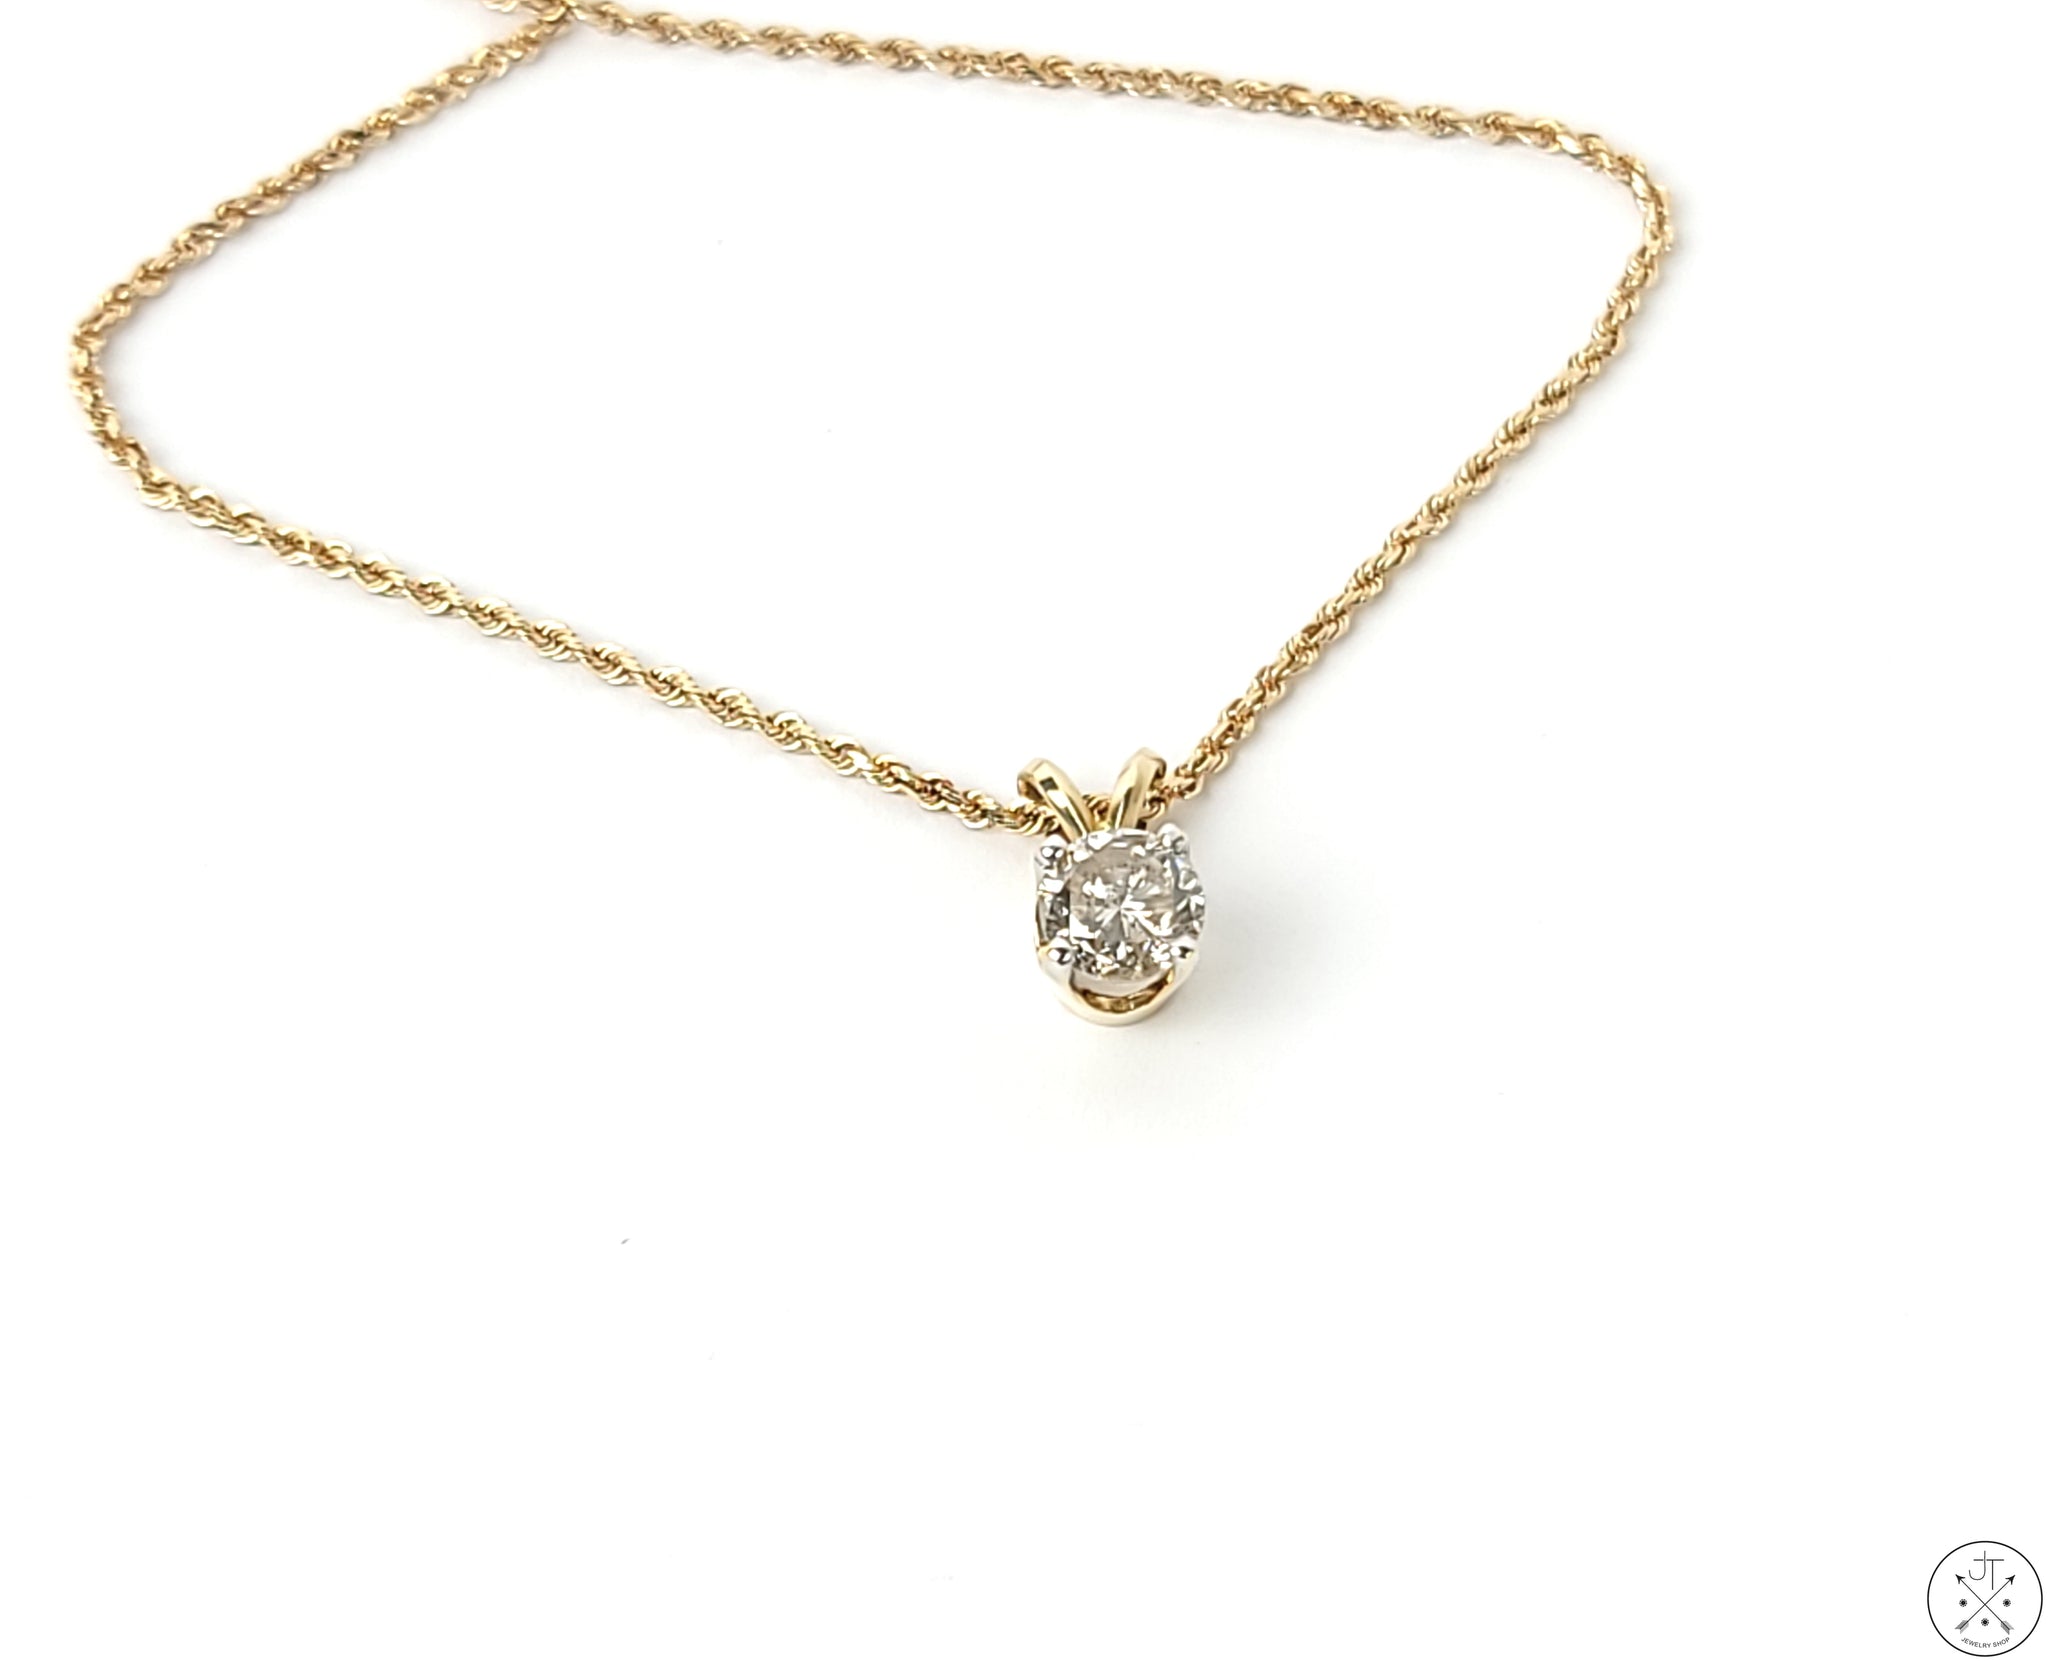 Long Geometric Amethyst Pendant Necklace | Amethyst necklace pendant,  Amethyst pendant, 925 sterling silver chain